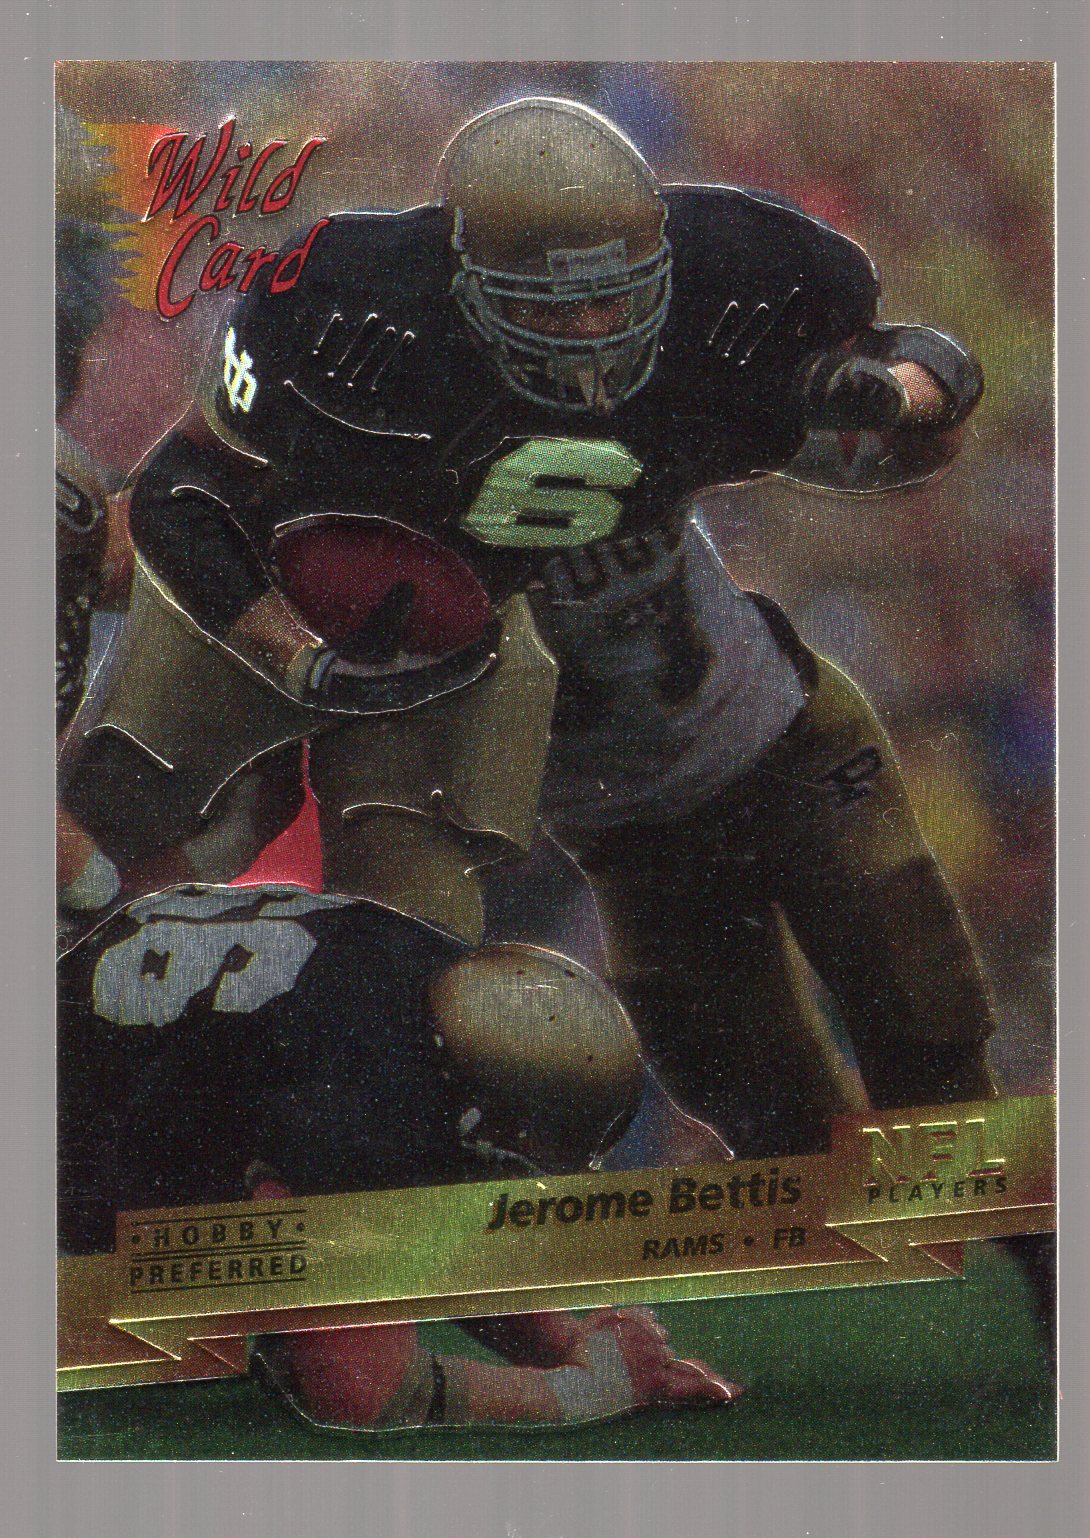  Jerome Bettis player image